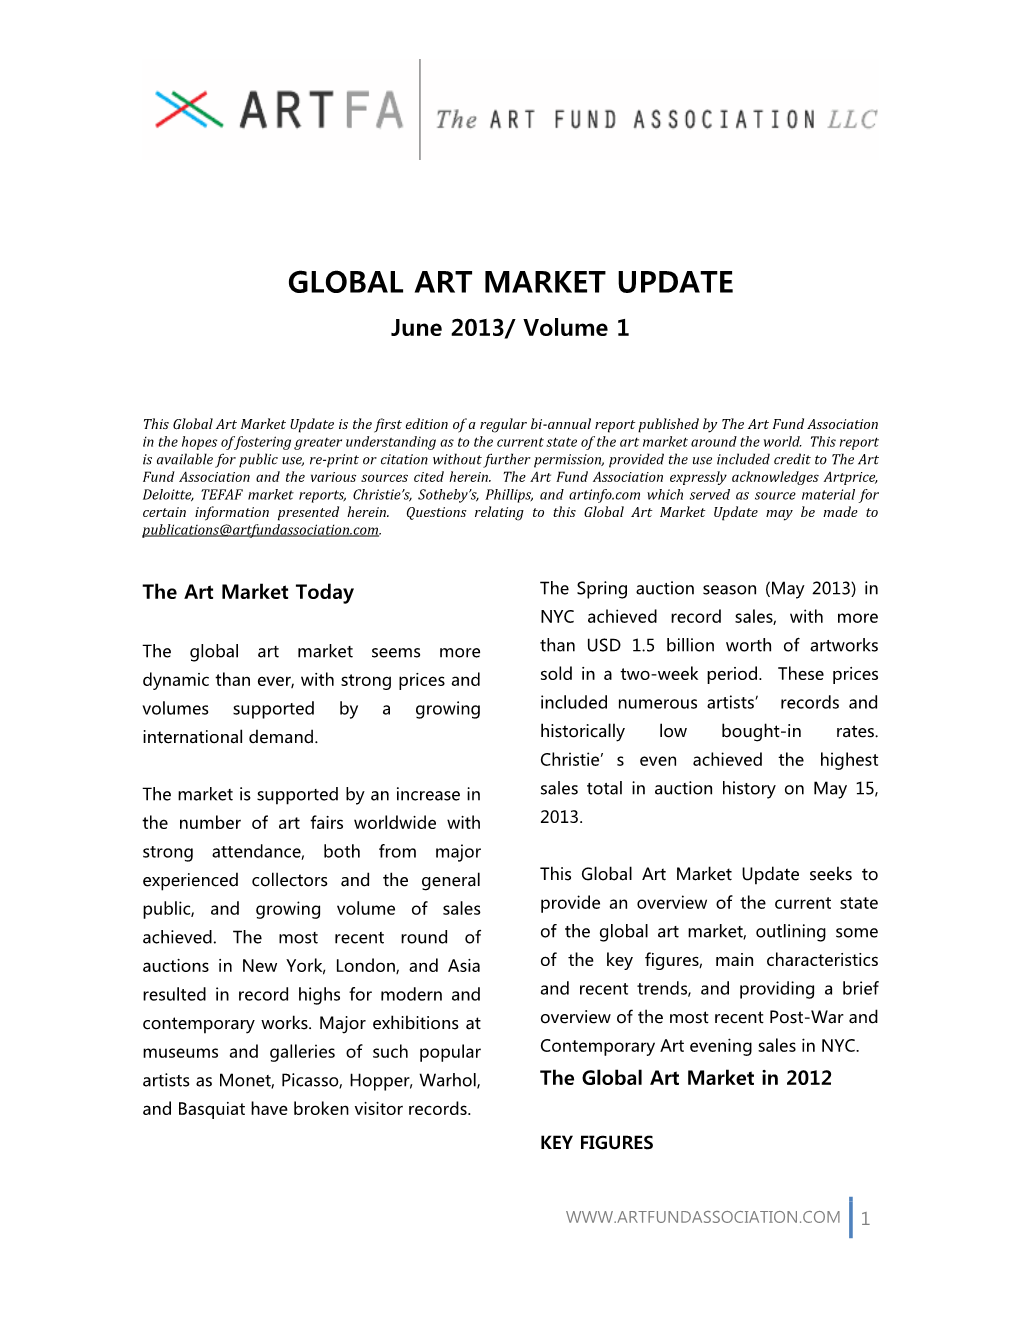 Art Fund Association Global Art Market Update, June 2013 Volume 1